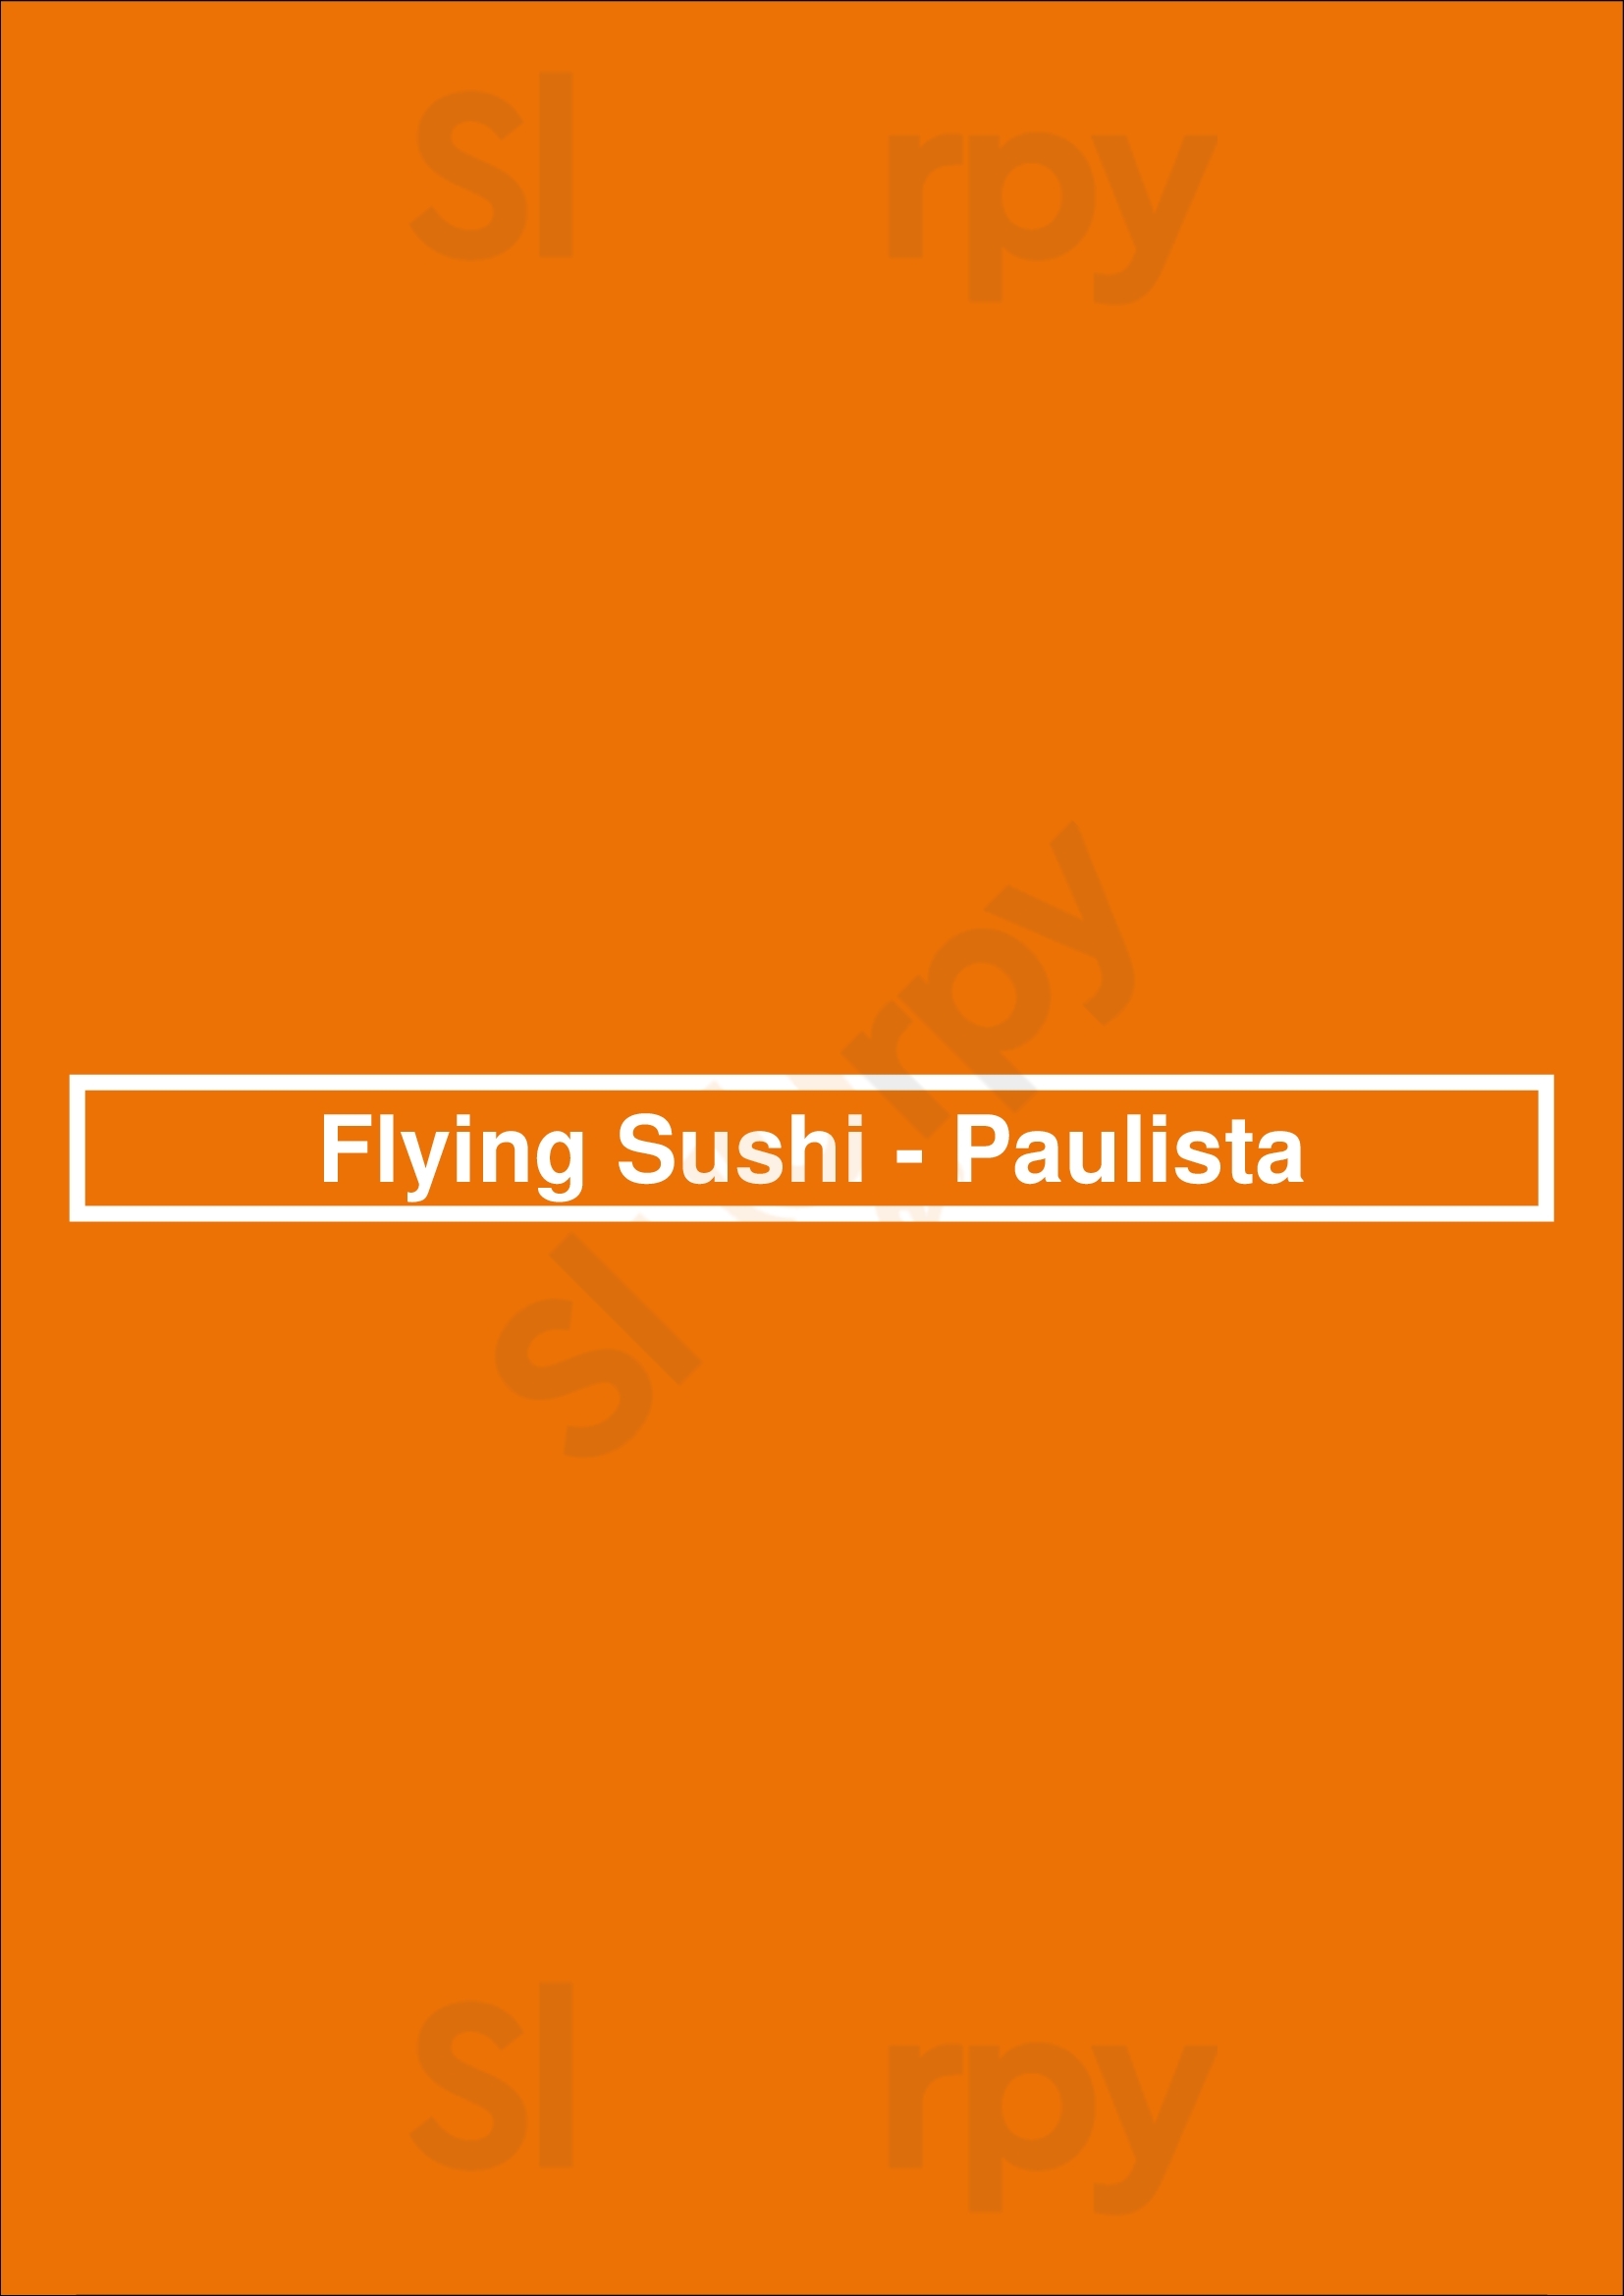 Flying Sushi - Paulista São Paulo Menu - 1